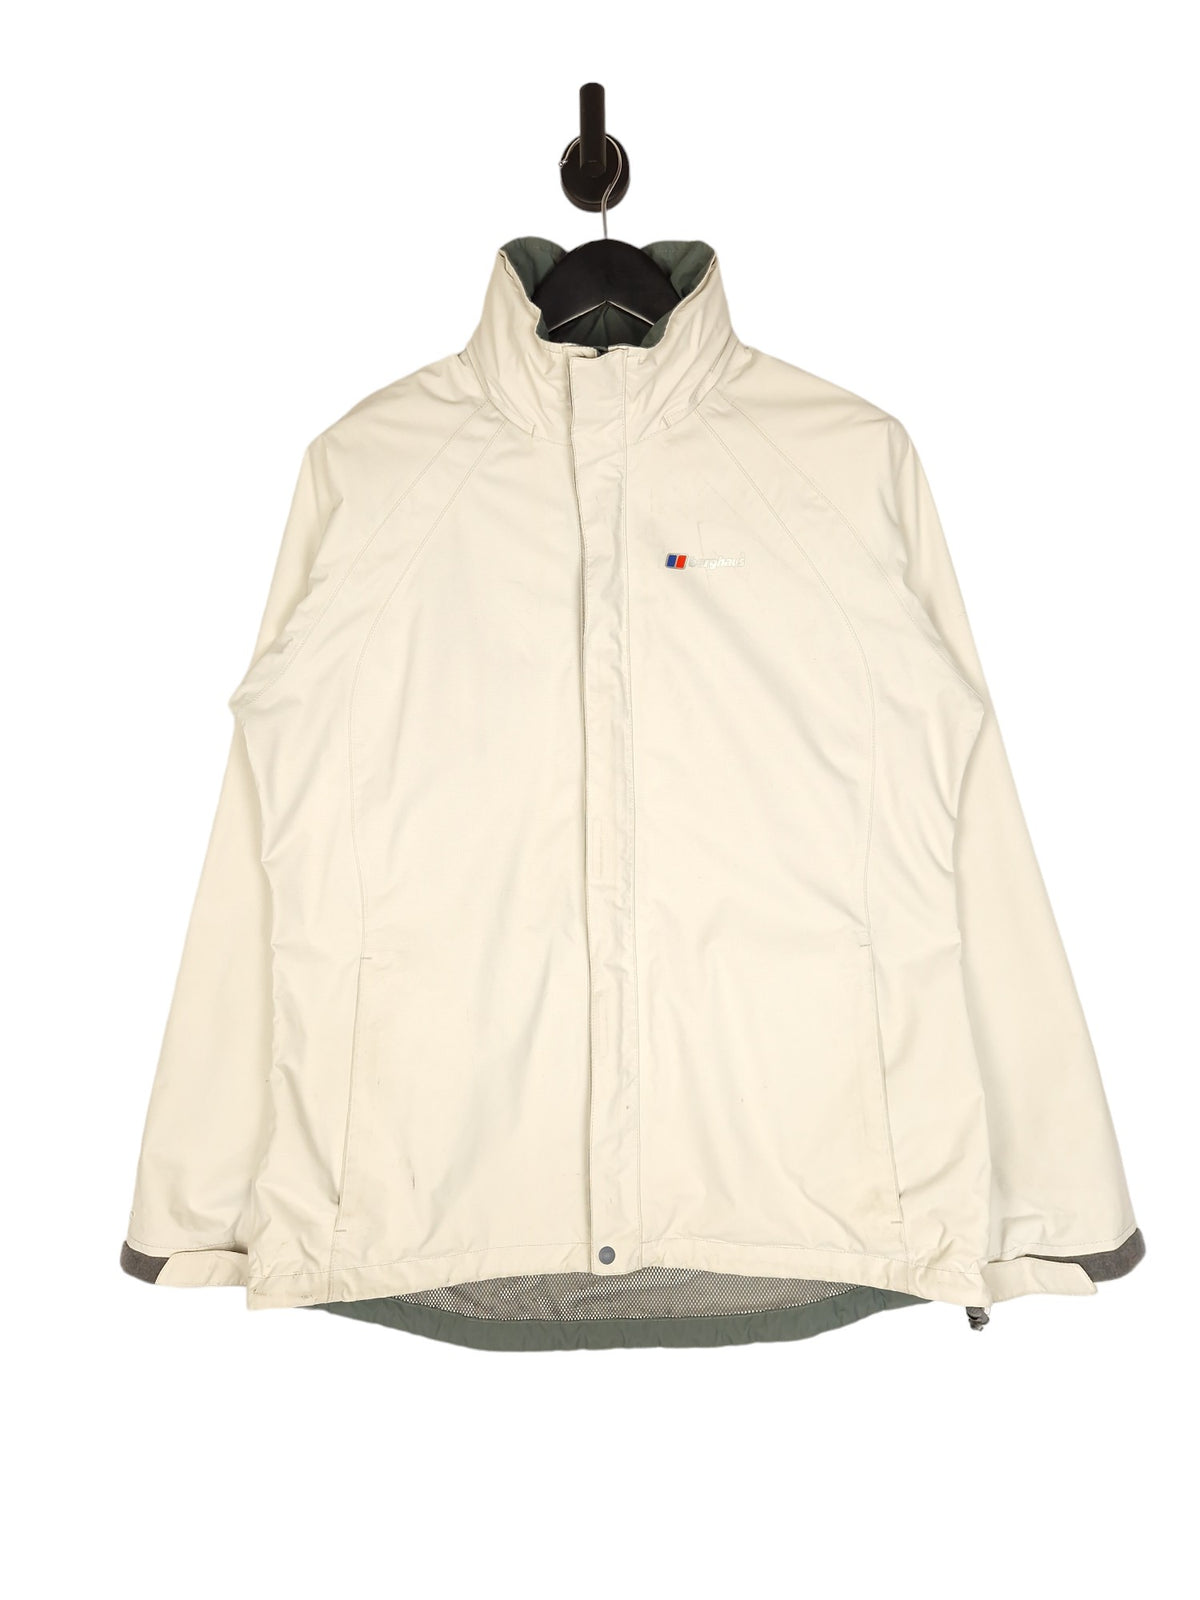 Berghaus AQ2 Rain Jacket - Size UK 16